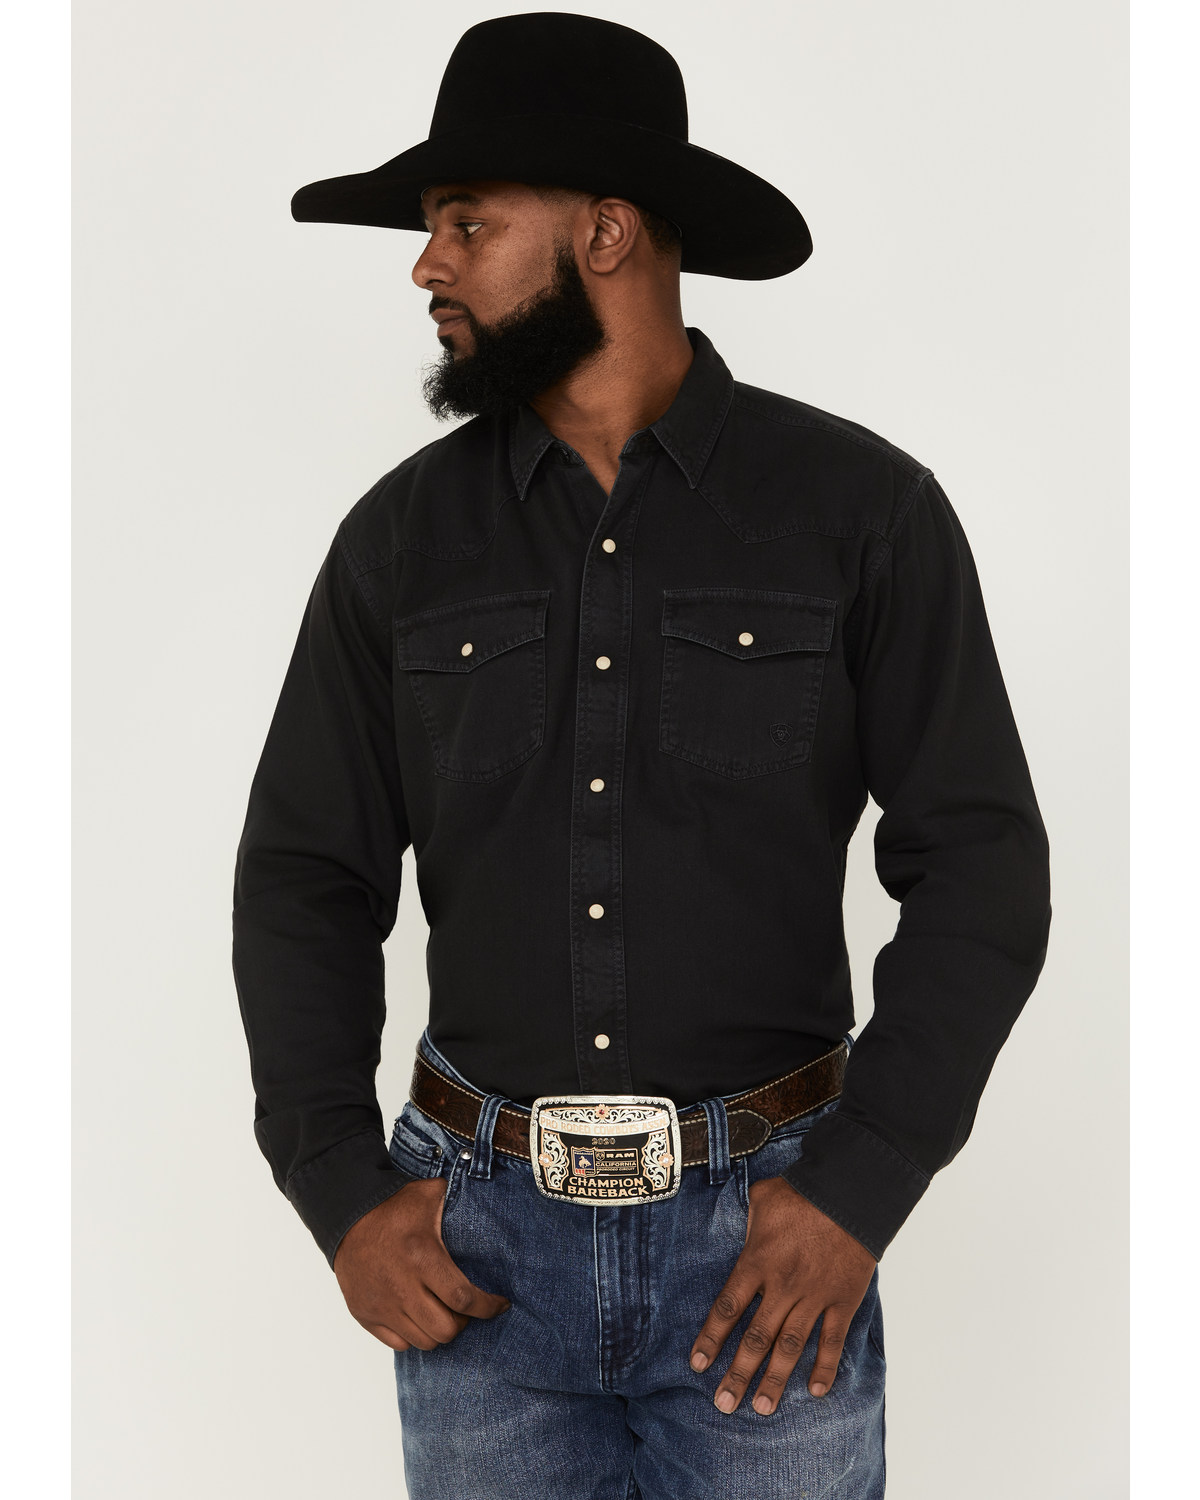 Ariat Men's Jurlington Retro Solid Pearl Snap Western Shirt